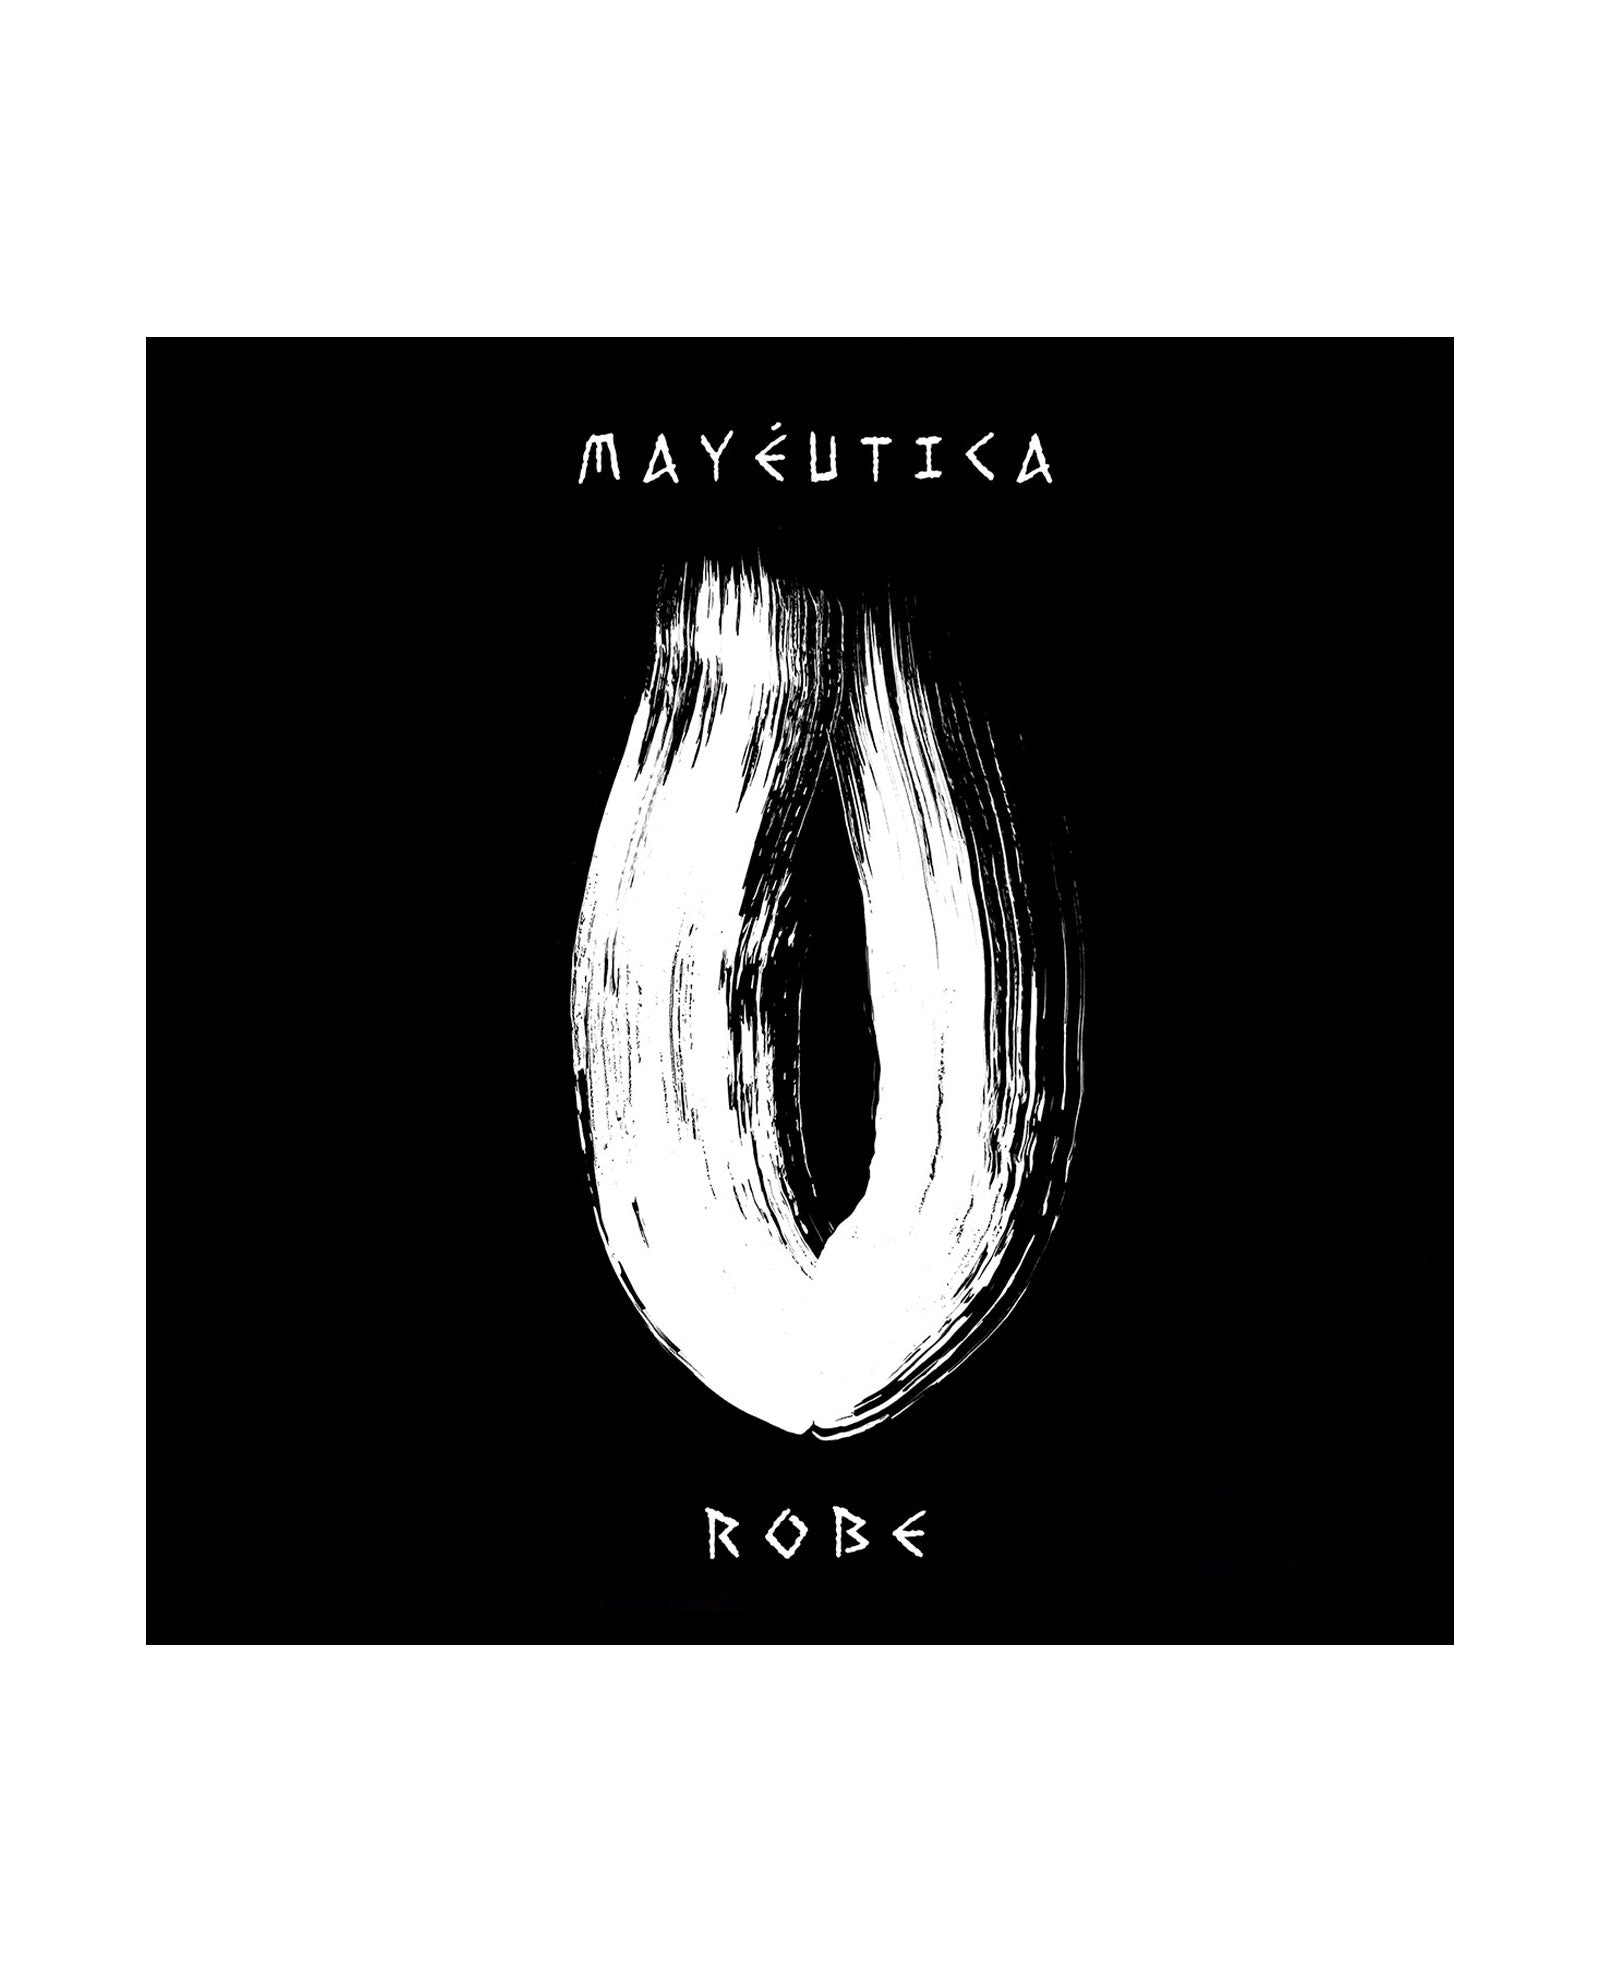 Robe - CD "Mayéutica" - Rocktud - Rocktud